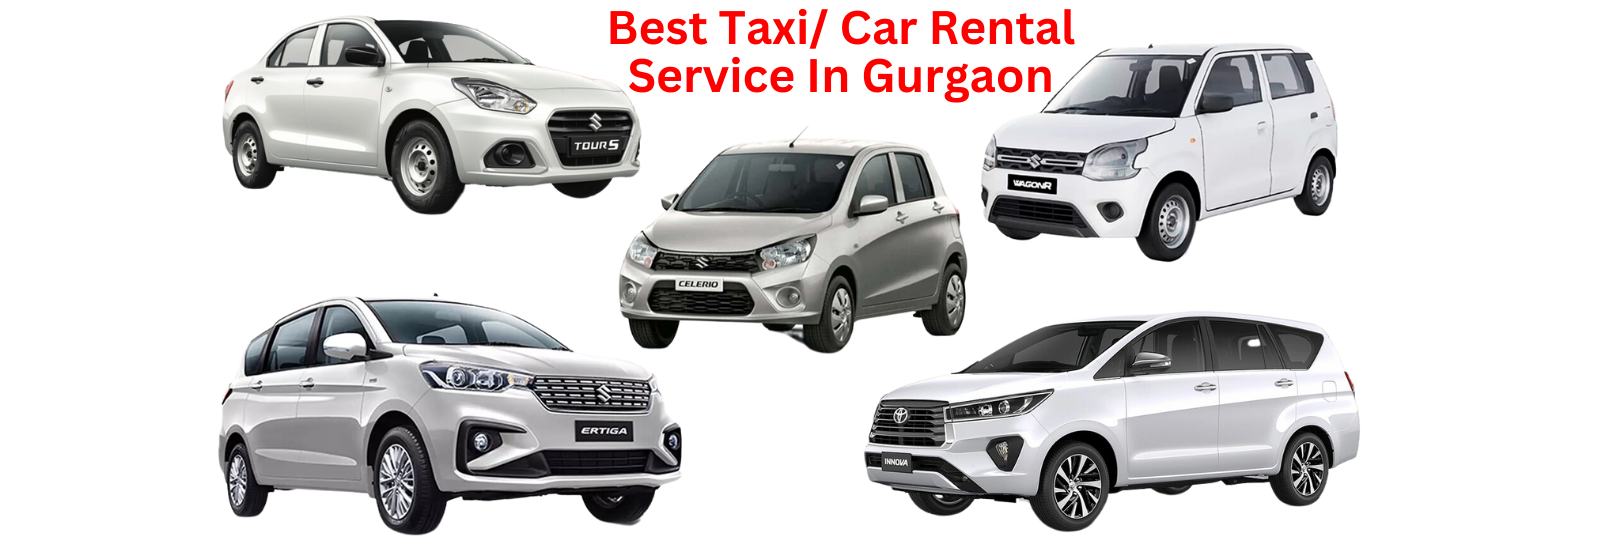 Best Taxi Car Rental Service In Gurgaon